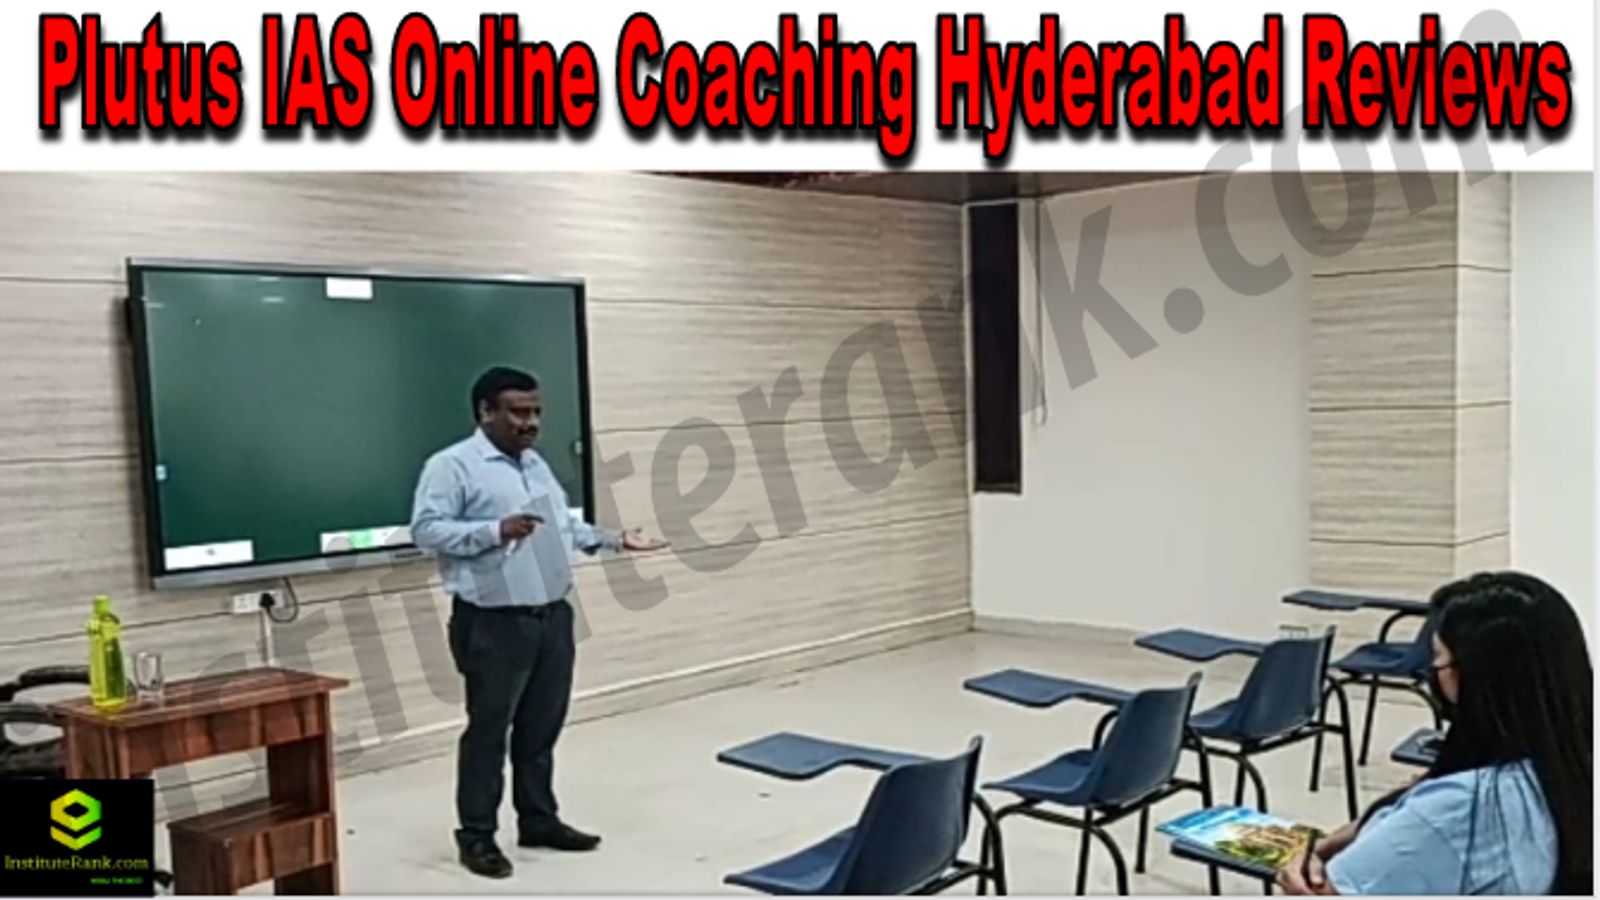 Plutus IAS Online Coaching Hyderabad Reviews